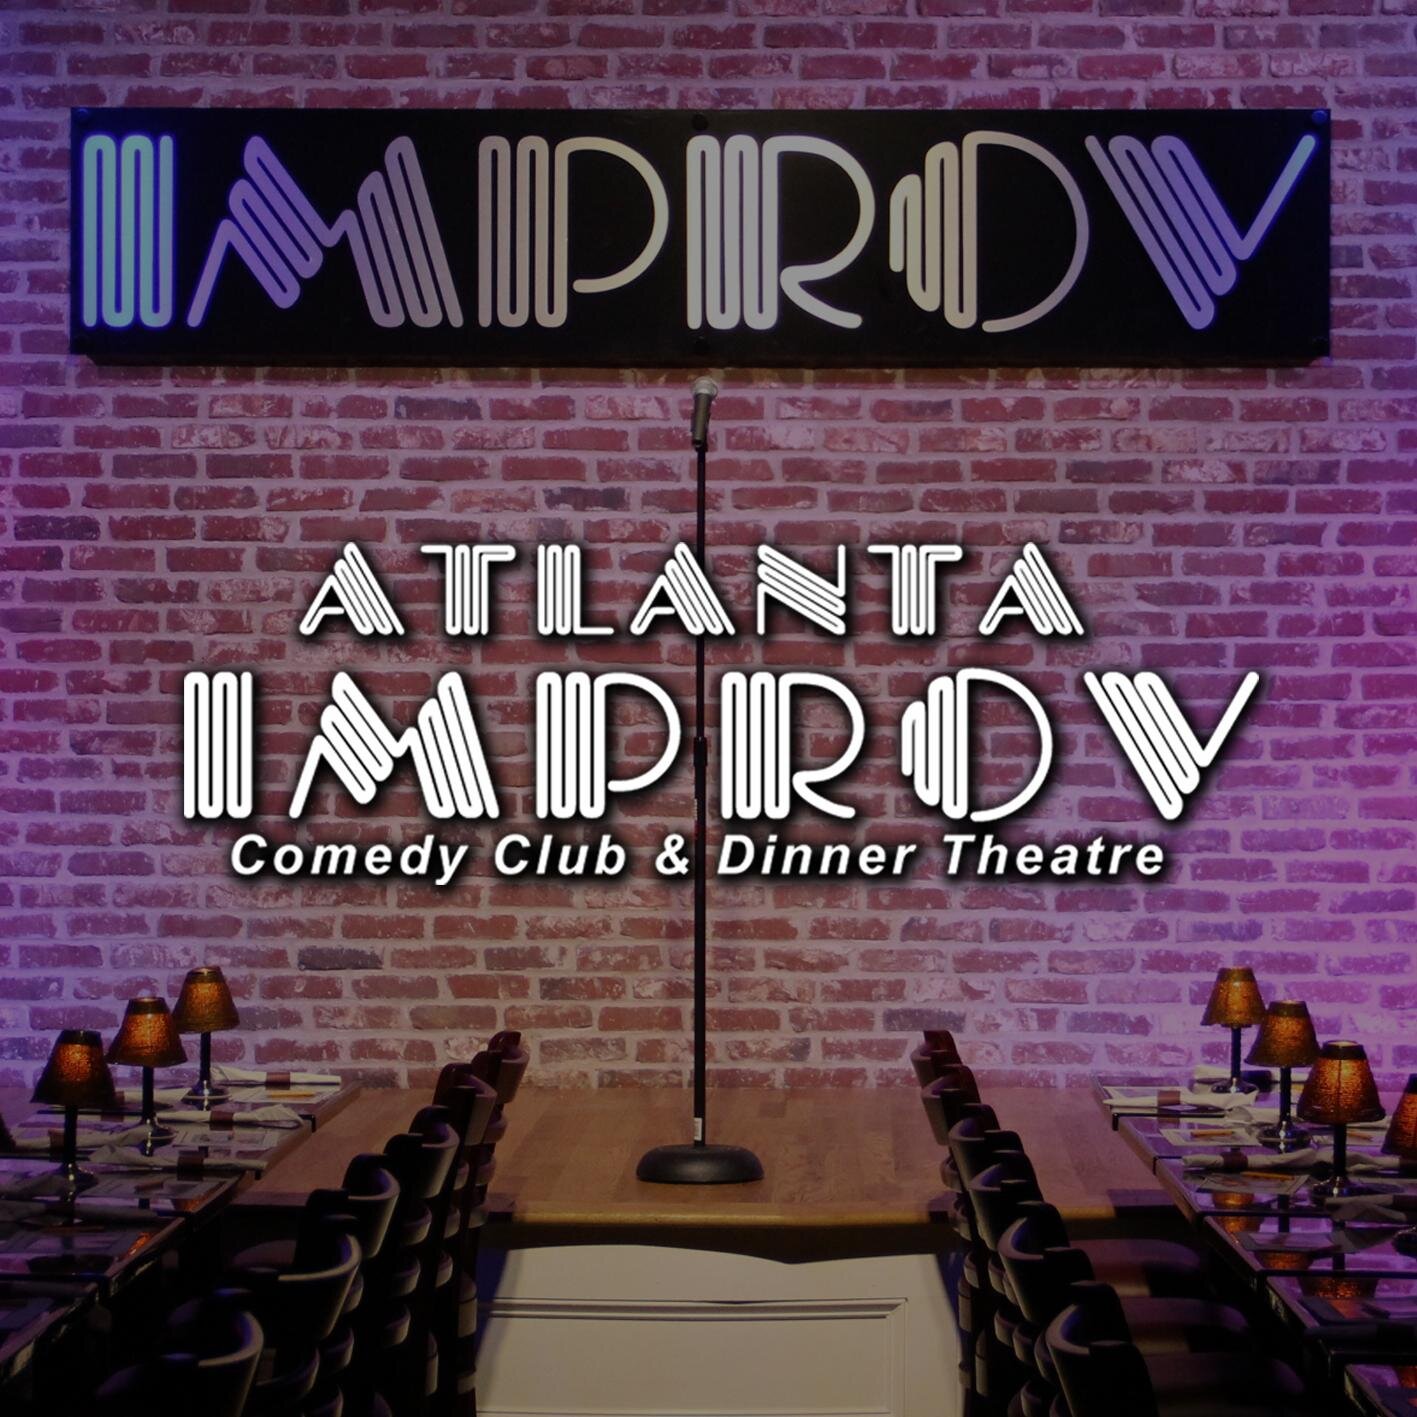 Budd Friedman's legendary Improv Comedy Club & Dinner Theatre with national comedians each week!